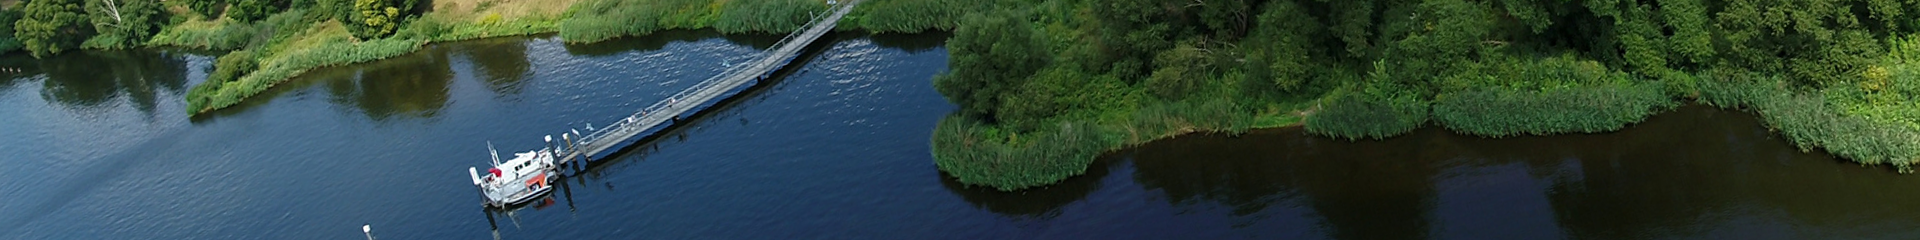 Luftbild Tesperhude an der Elbe (Foto: Michael Streßer / Hereon)